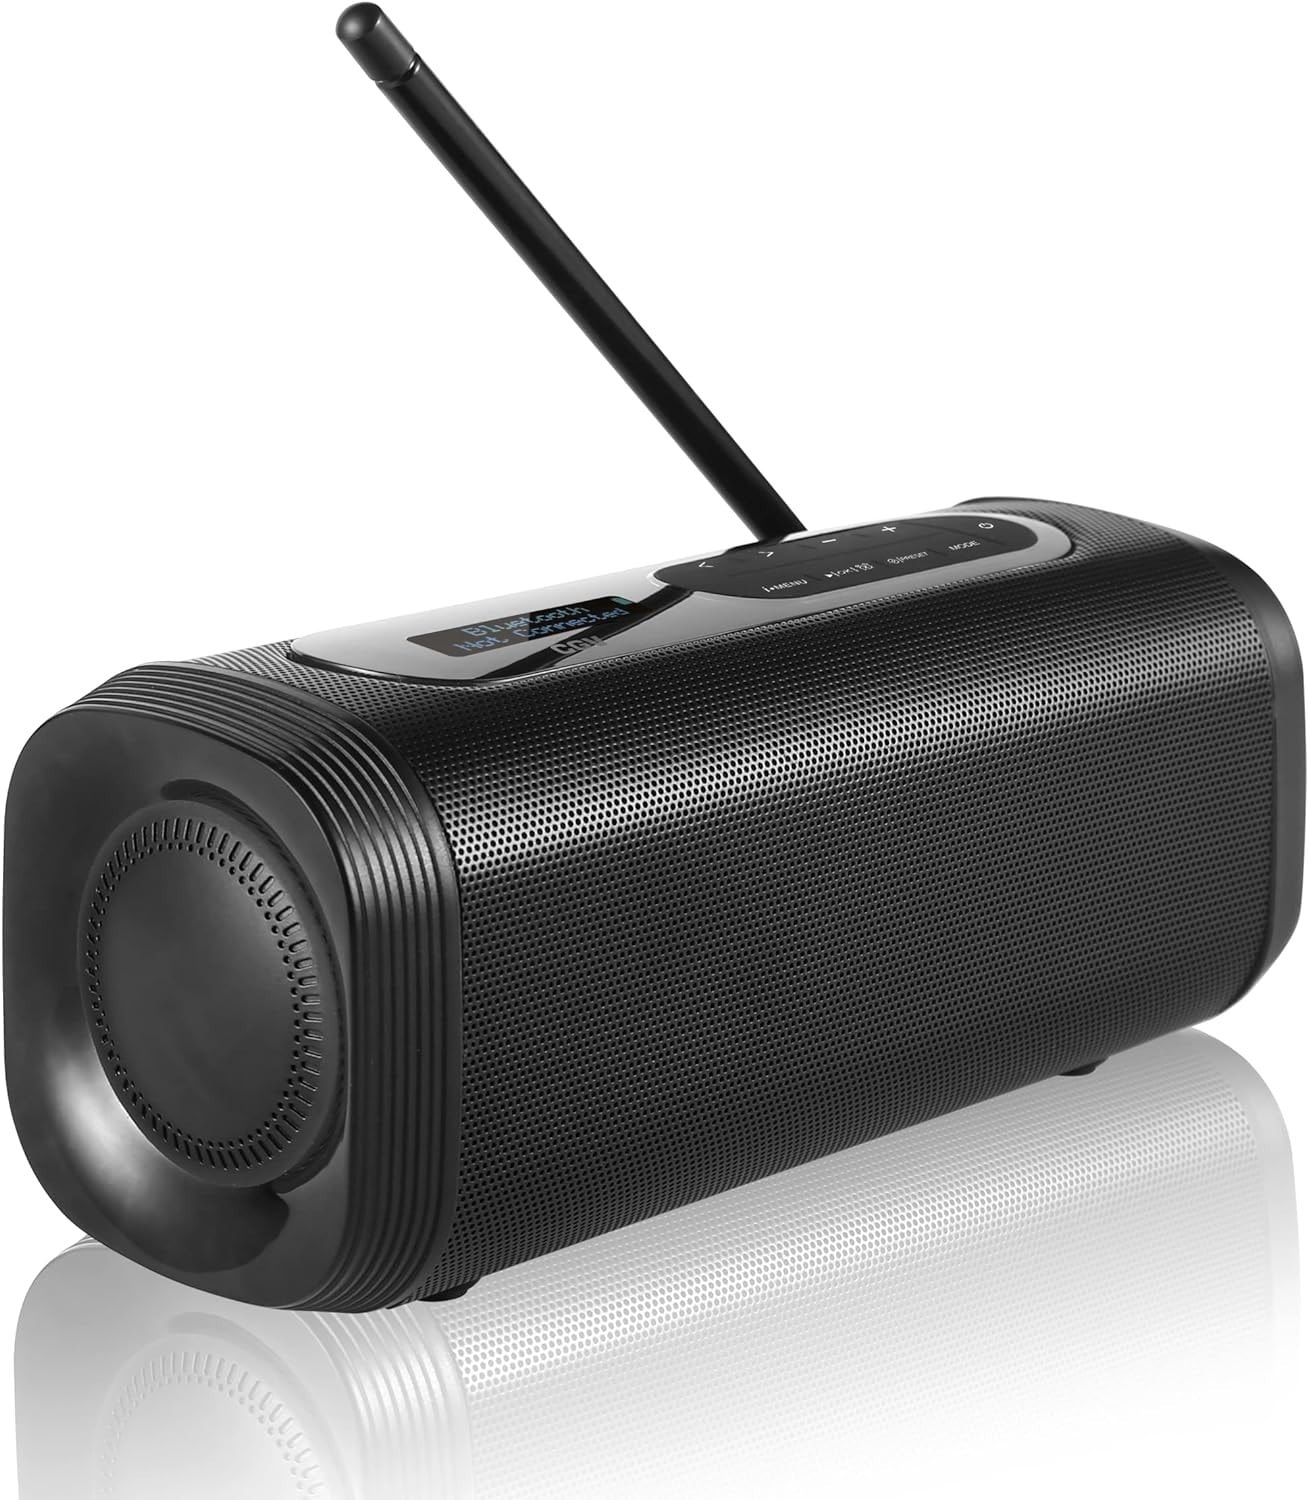 Enceinte nomade bluetooth radio dab+ fm - my speaker+ noir - portée 10m,  bluetooth 5.0, alarme / réveil, autonomie 10h CGV Pas Cher 